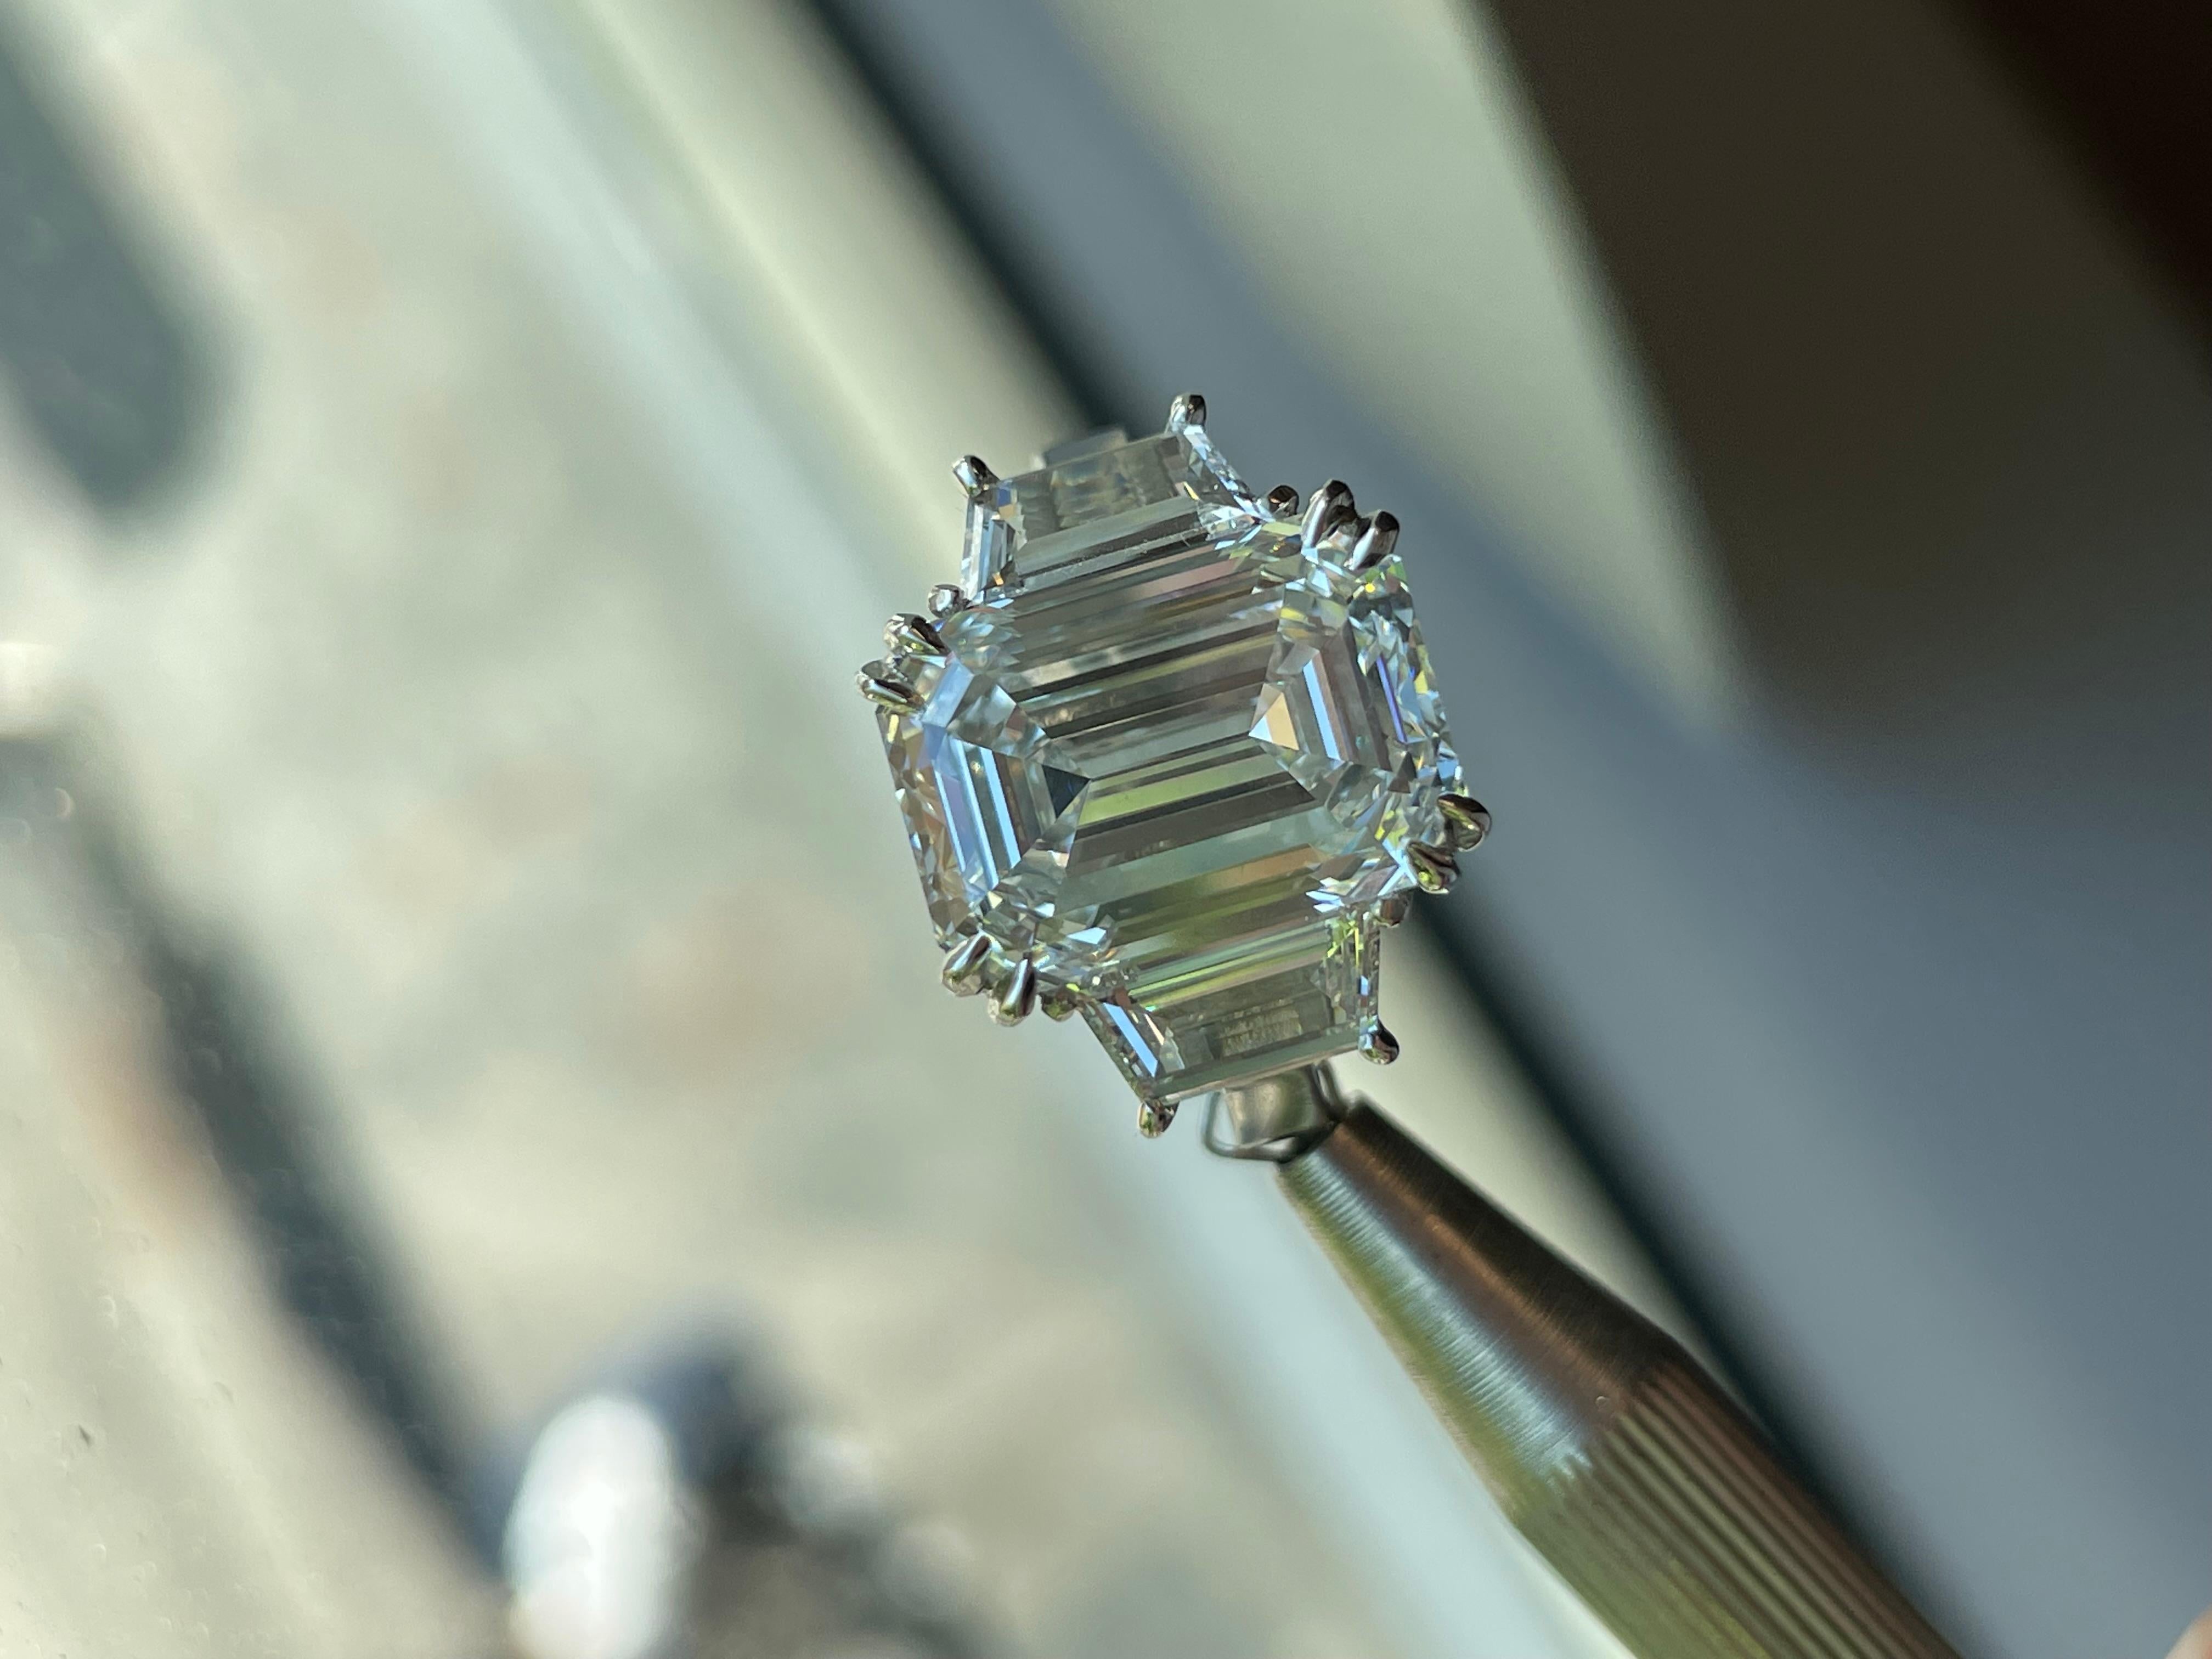 Extraordinary 7.41 Carat Emerald Cut Diamond Engagement Ring

Setting:
Platinum

Center Stone: GIA Certified Emerald Cut Diamond
Carat Weight: 7.41
Clarity: VSS1
Color: H

Side Stones: Trapezoid Cut Diamonds
Color: G-H
Clarity: VS
Cut: Excellent
The